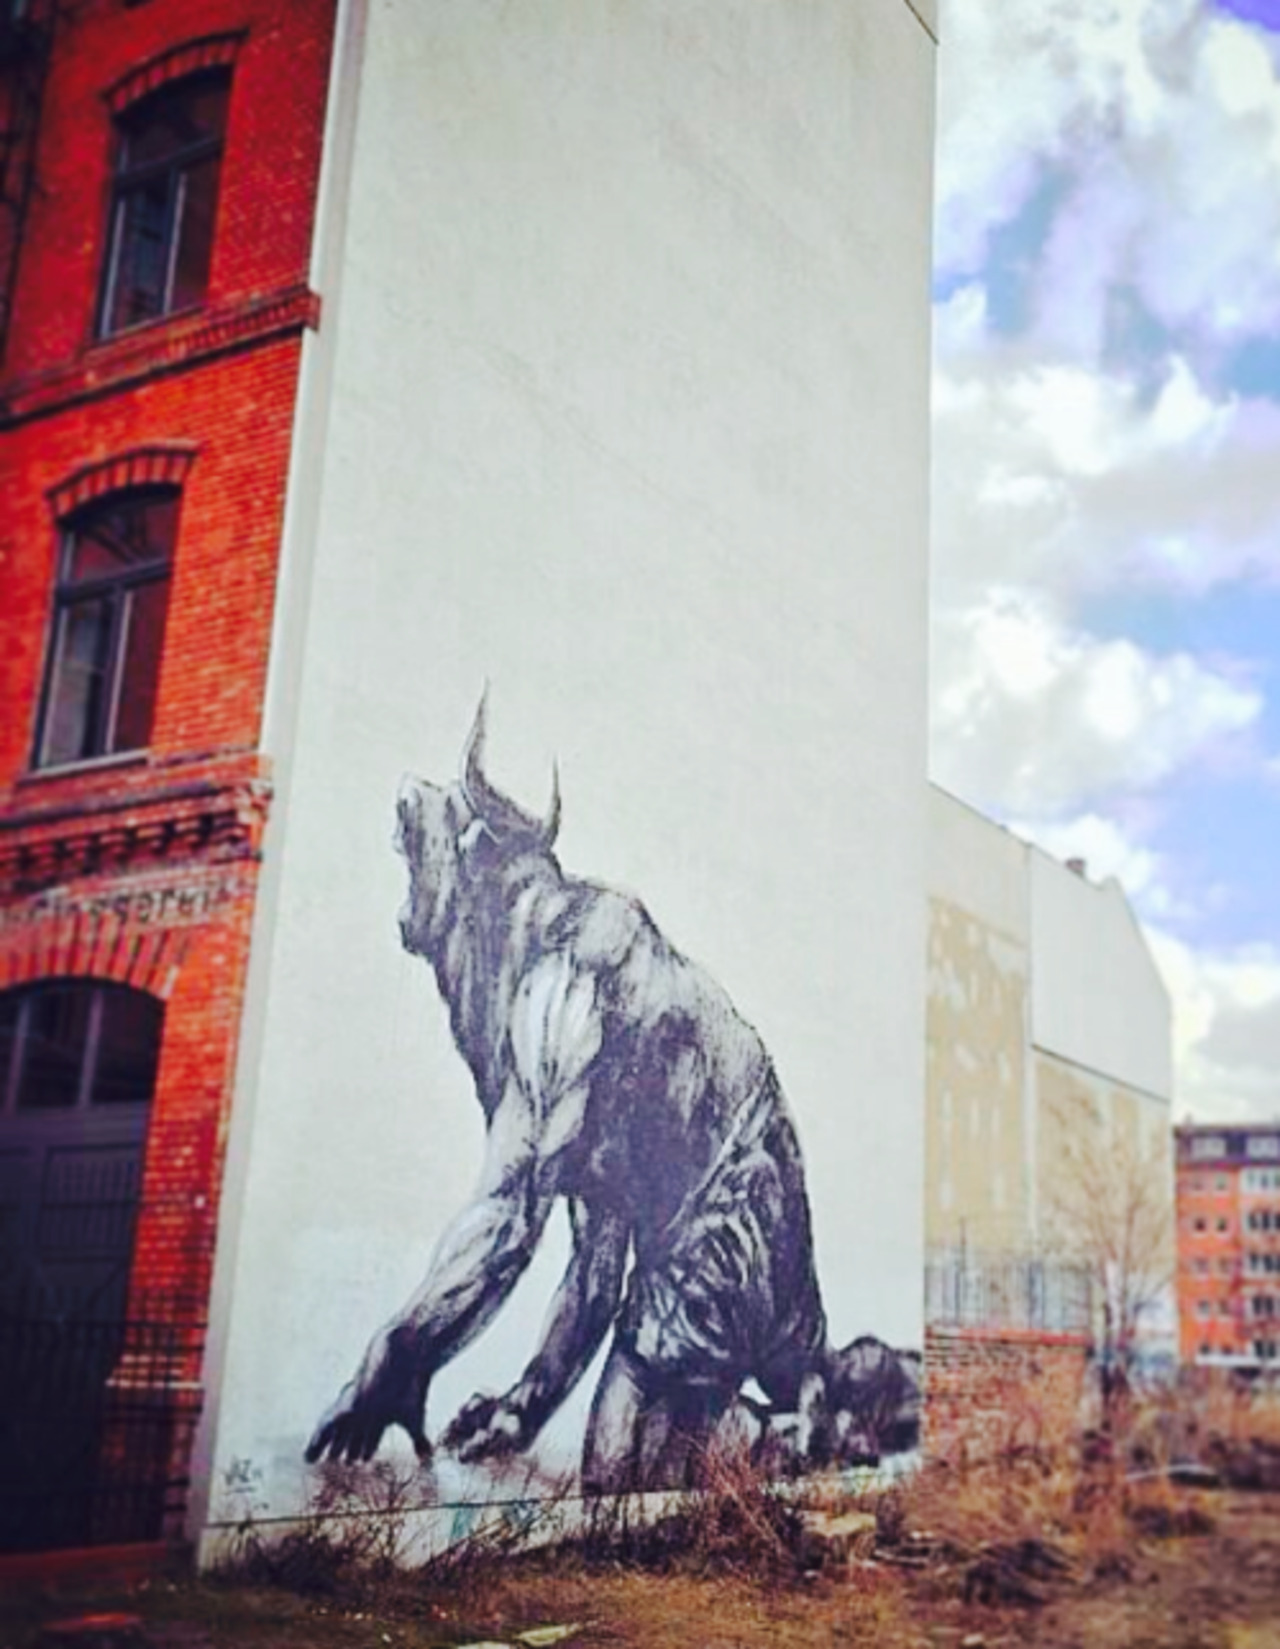 RT @Zang_Media: Photo - #Graffiti #Mural #Murales #StreetArt - #ZangArt #Showcase - http://bit.ly/1x5WMJw http://t.co/4j8n3e0a1I